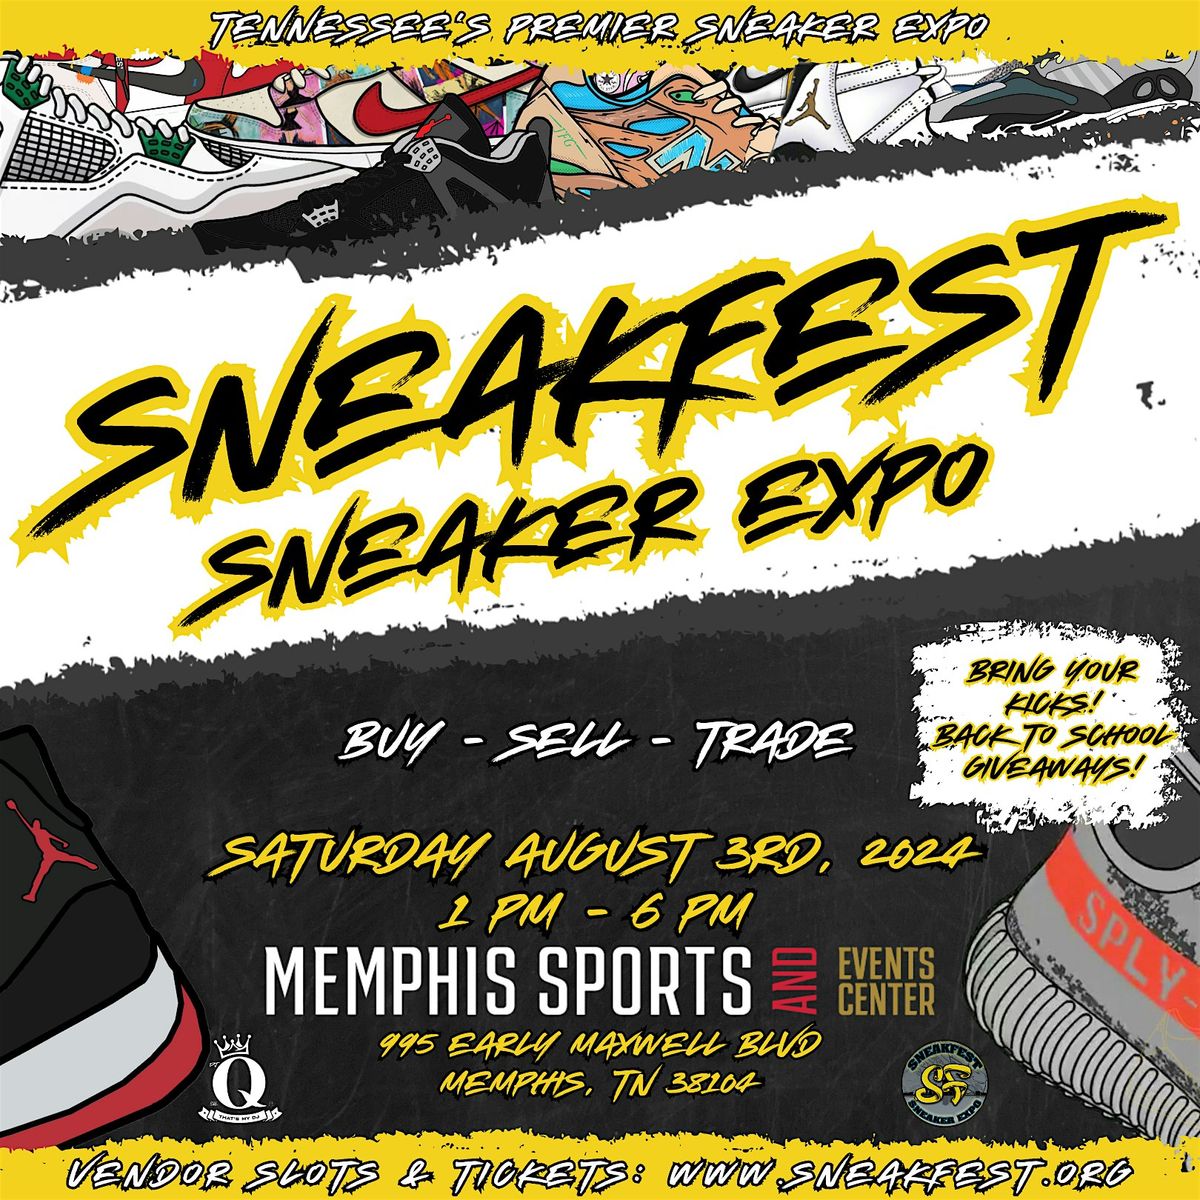 SneakFest Sneaker Expo